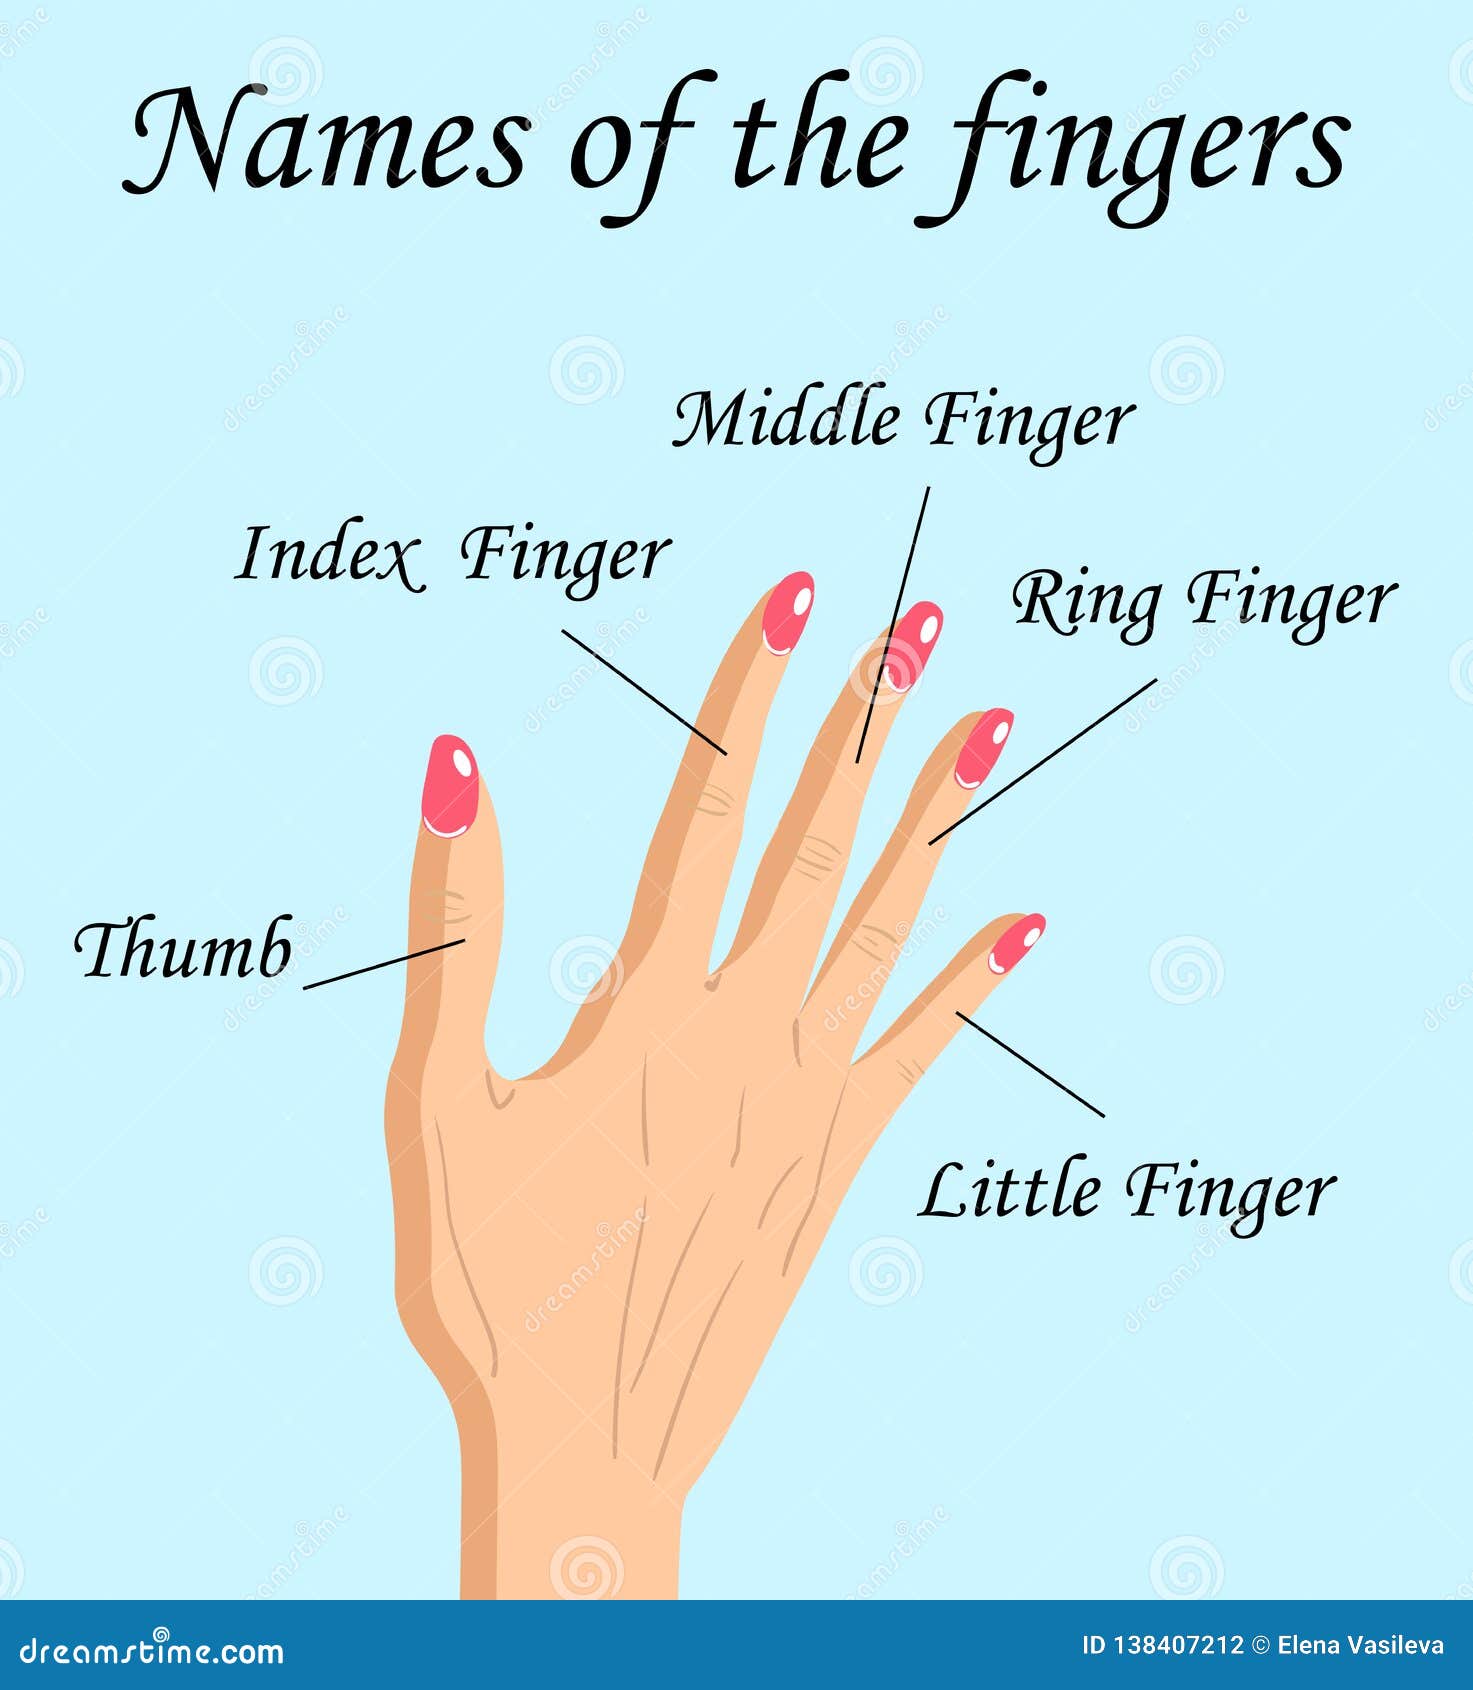 fingers-names-human-body-parts-vector-cartoon-illustration-human-fingers-its-names-fingers-names-human-body-parts-138407212.jpg